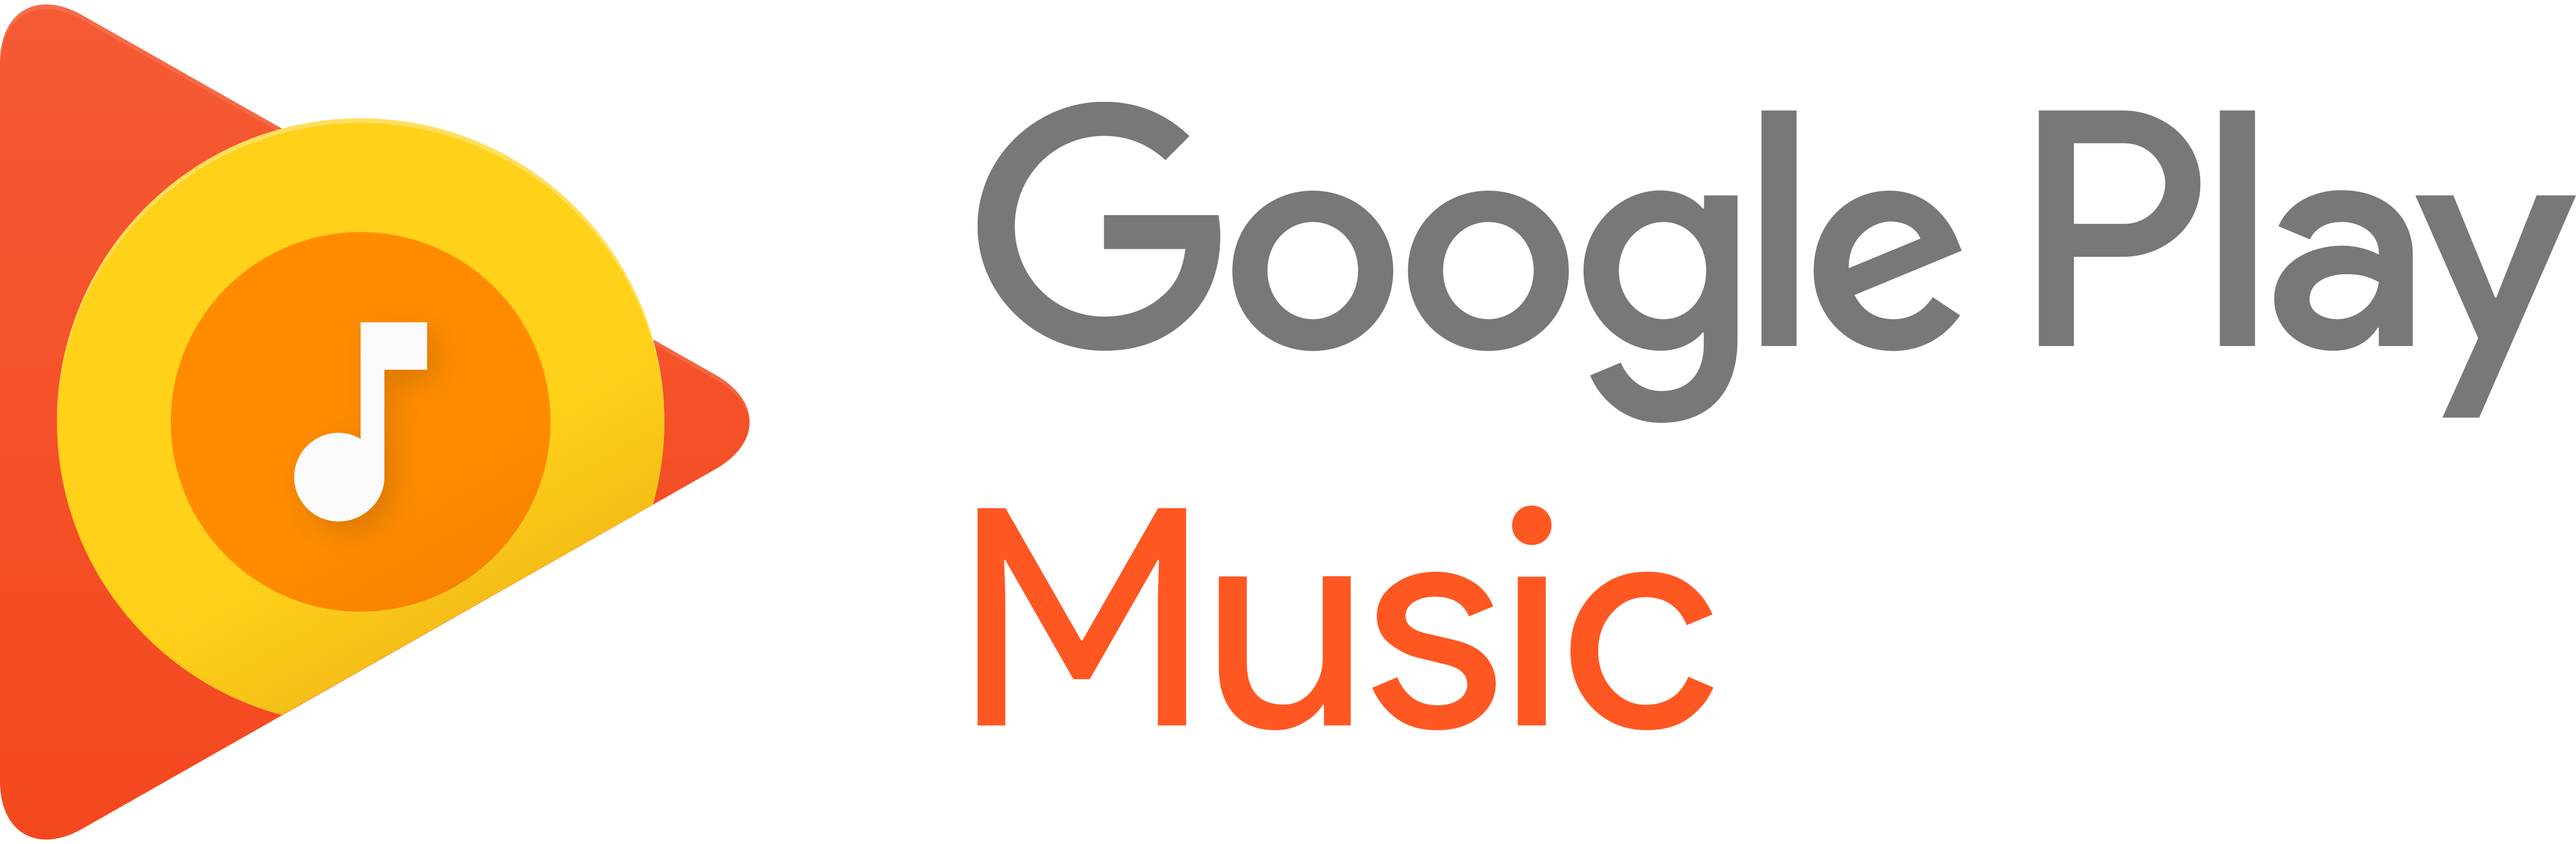 google play - music 